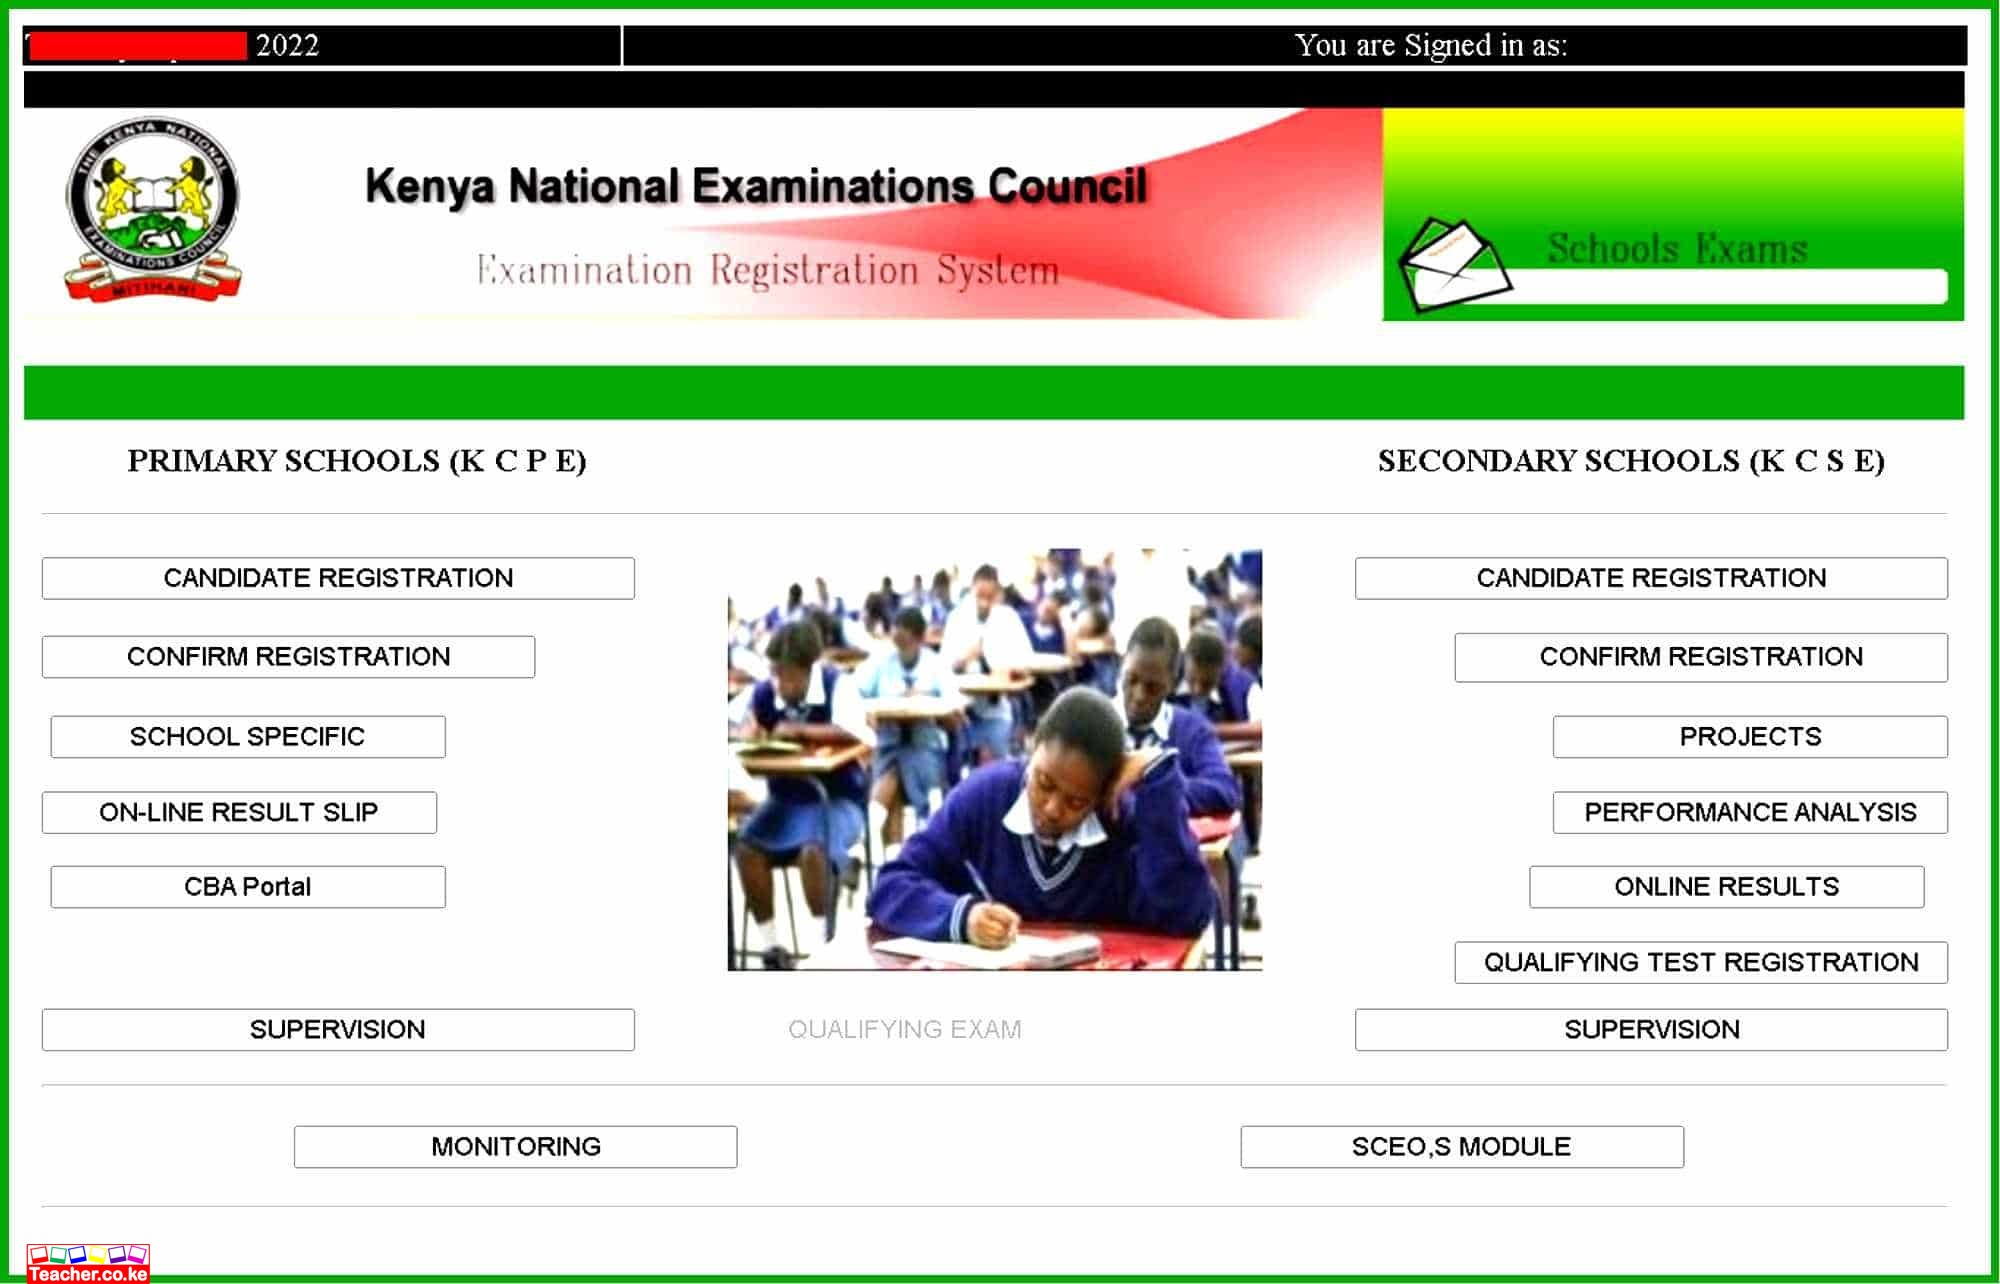 St. Comboni Amakuriat Secondary School 2021 KCSE Results